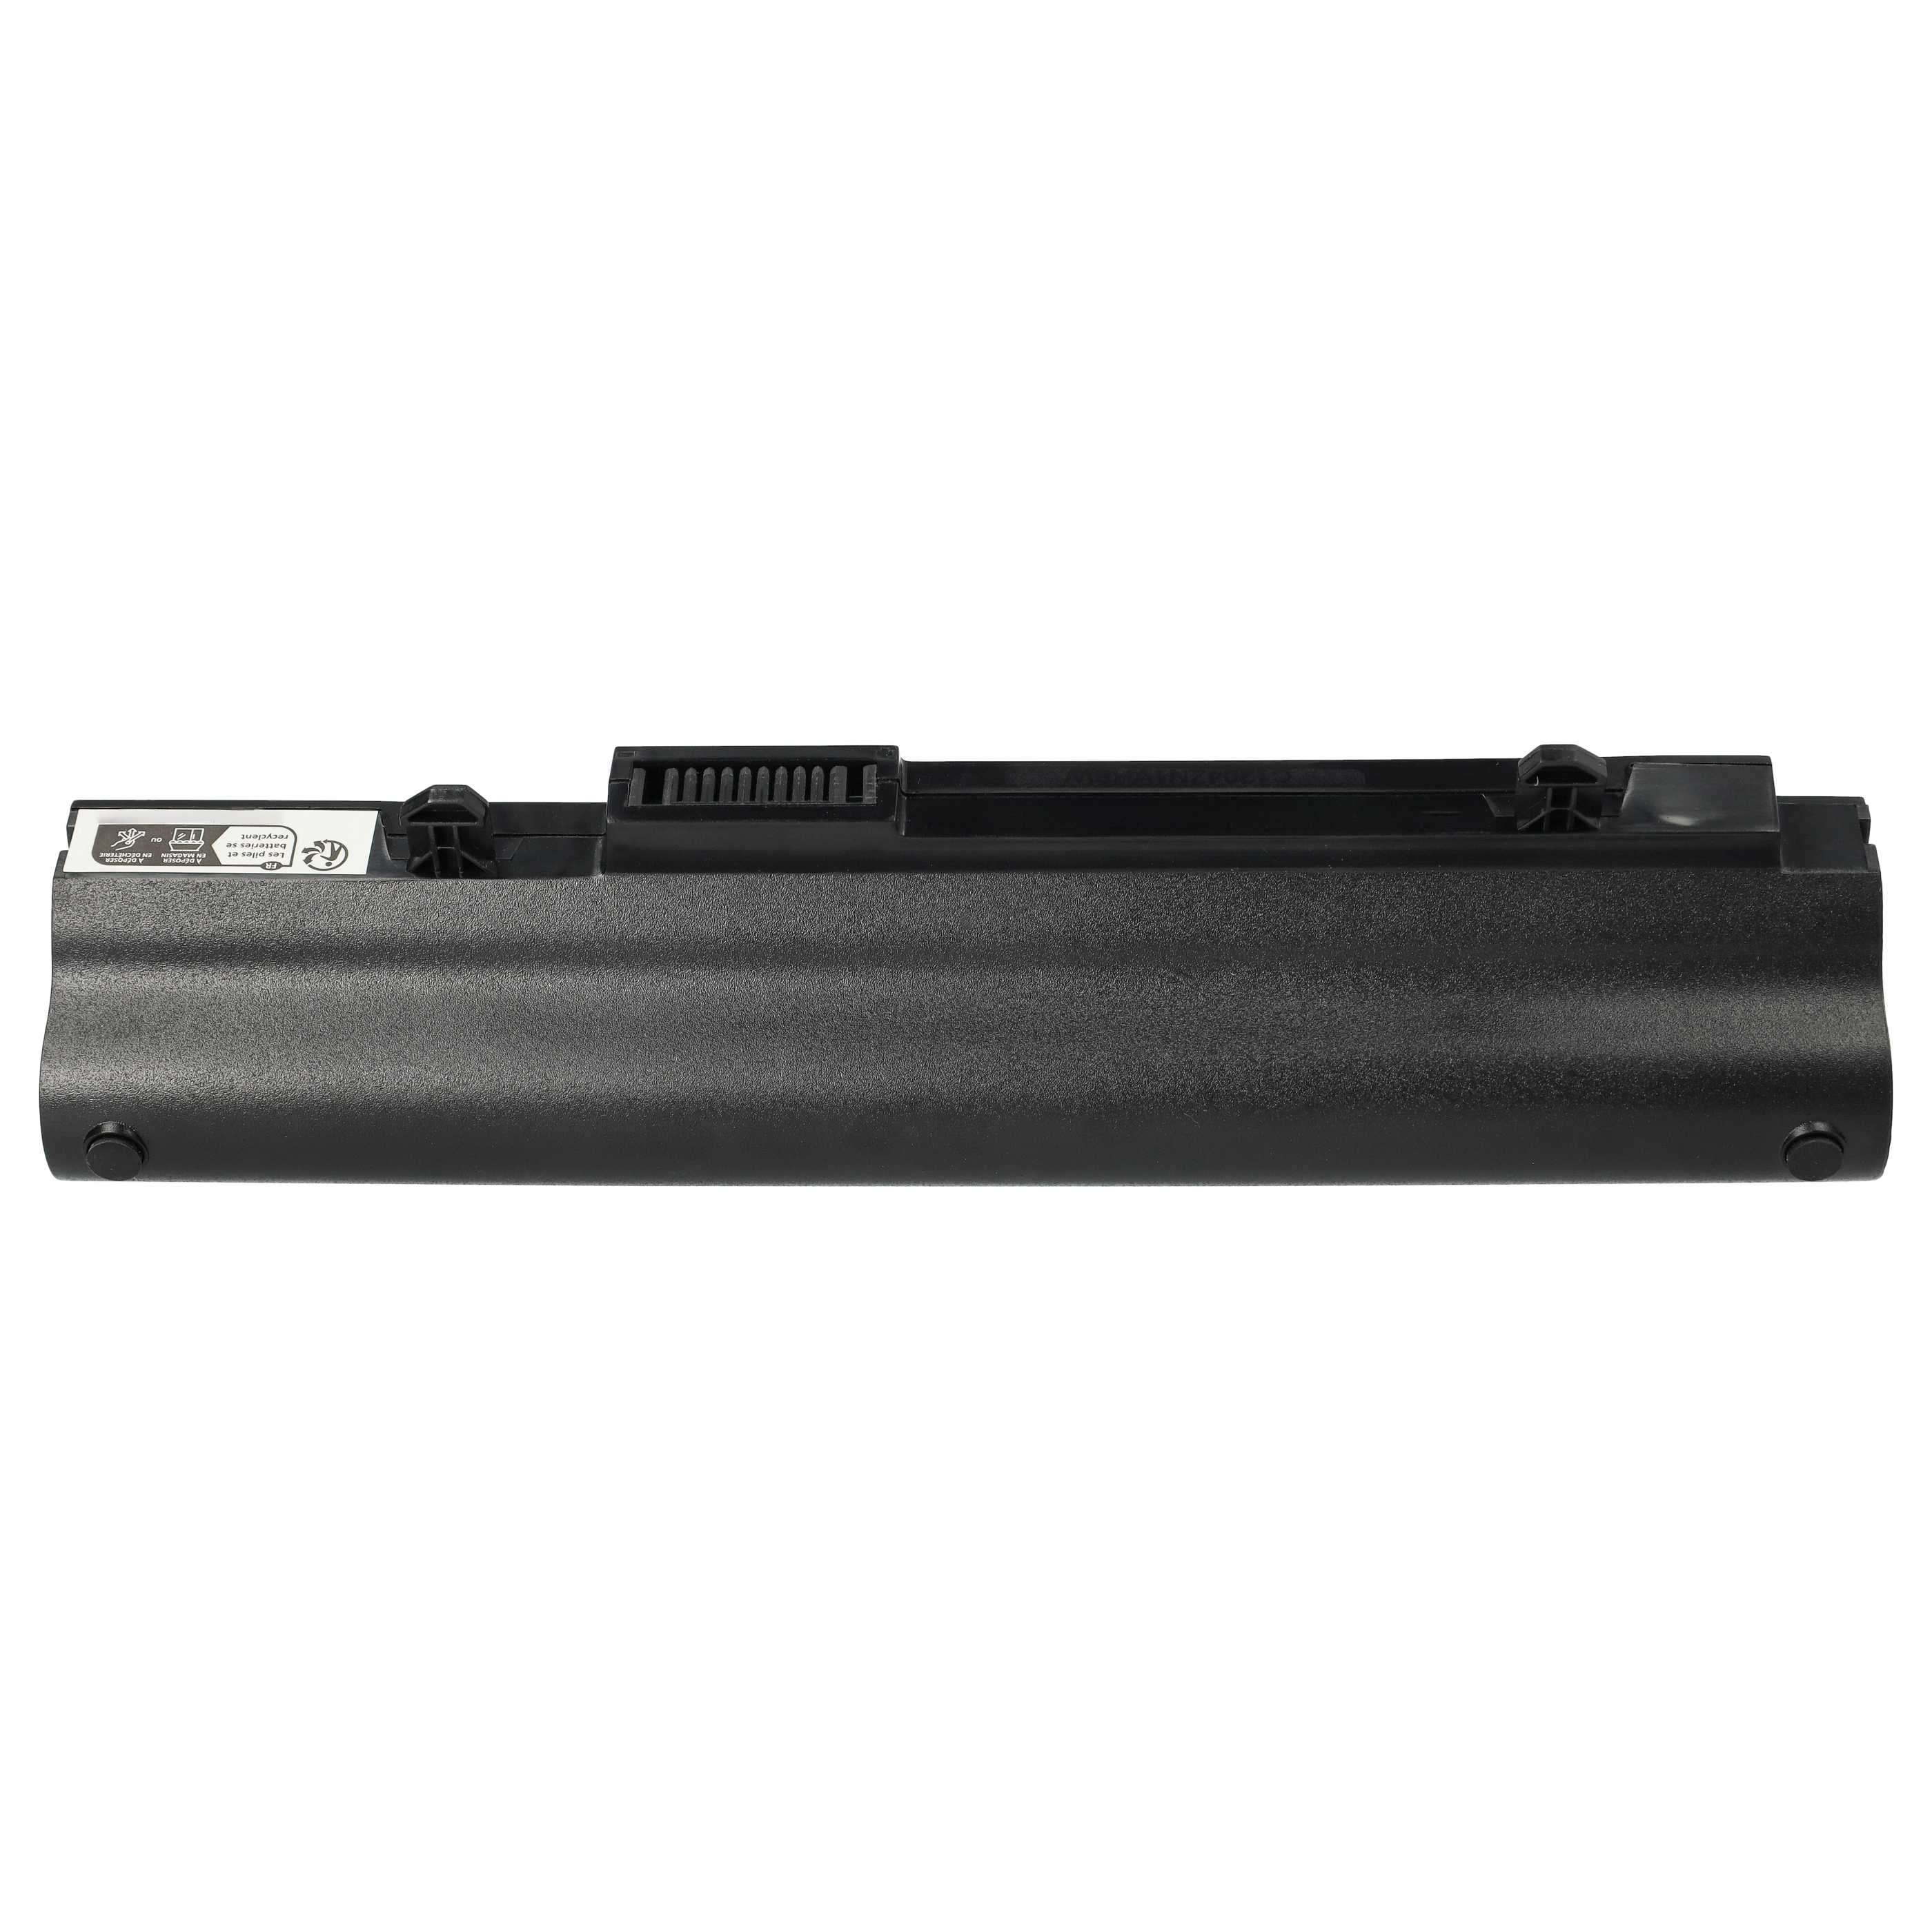 Akumulator do laptopa zamiennik Asus A31-1015, A32-1015, AL31-1015, PL32-1015 - 2200 mAh 10,8 V Li-Ion, czarny